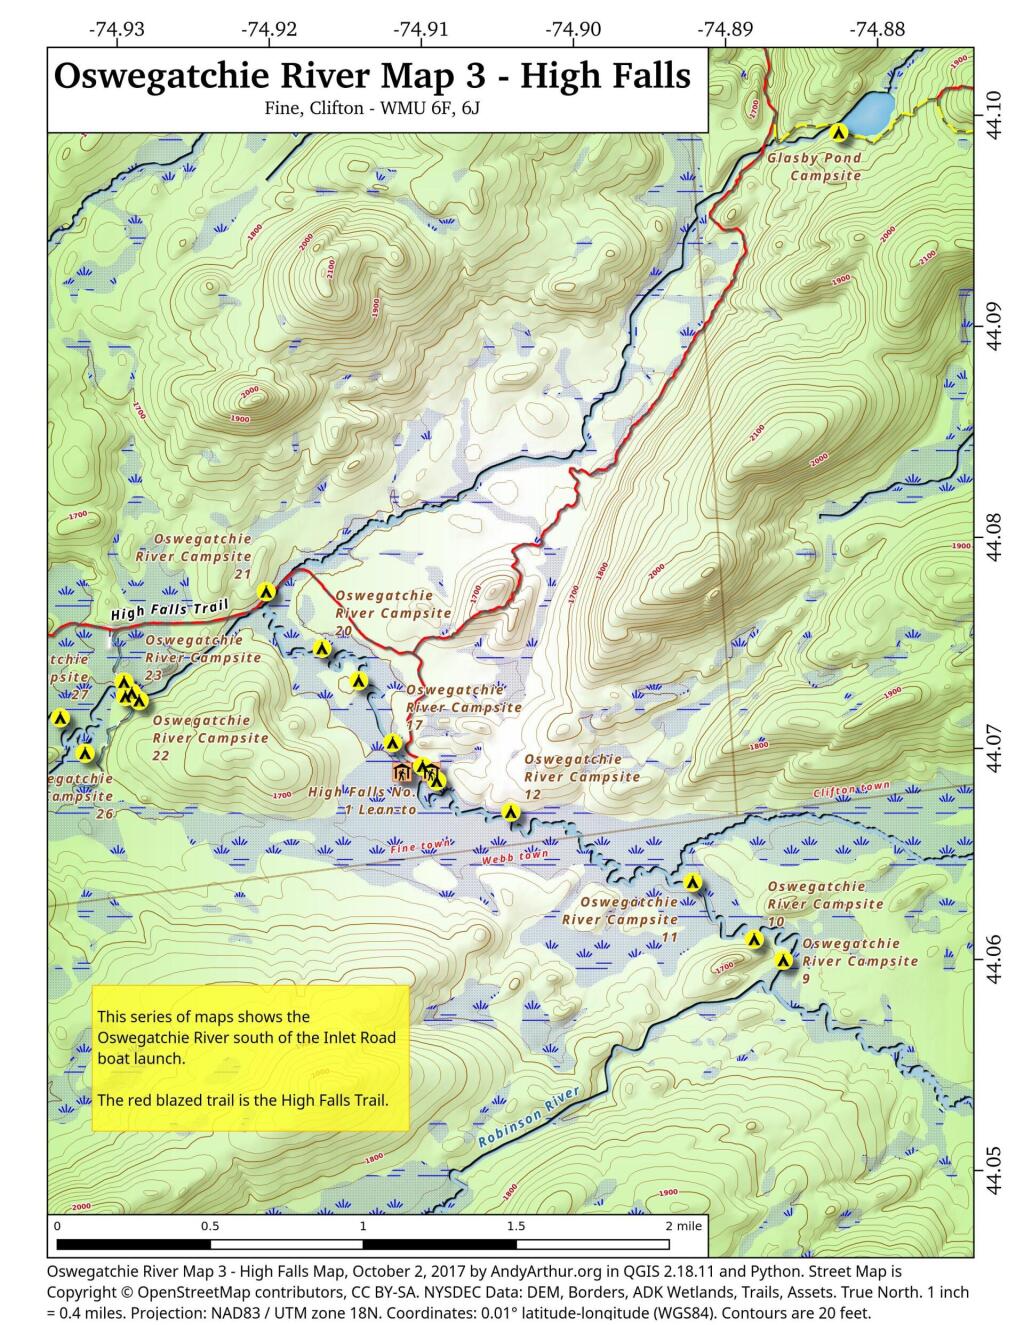  Oswegatchie River Map 3 - High Falls